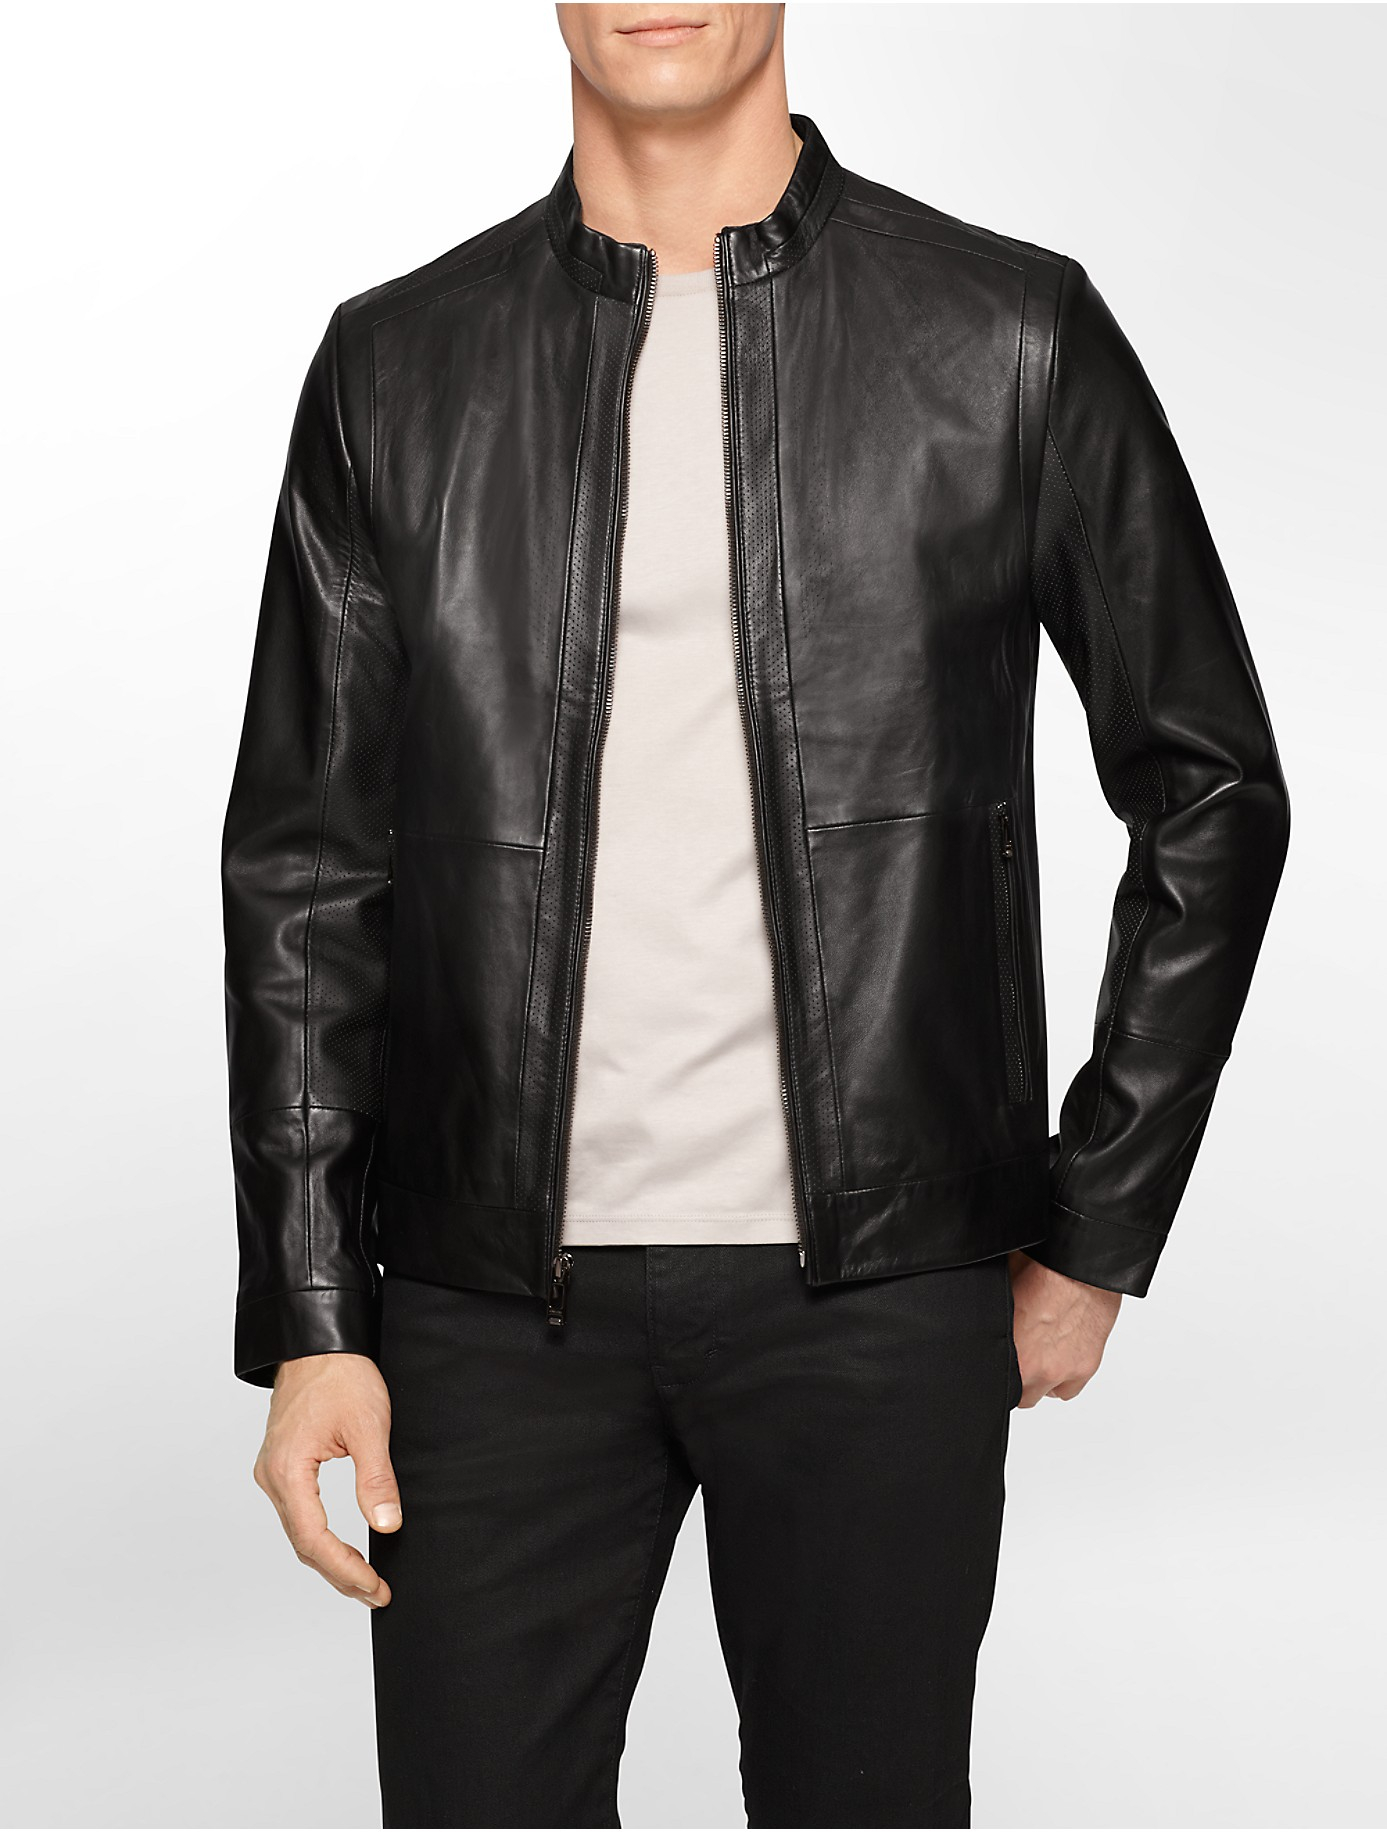 Lyst - Calvin Klein White Label Premium Slim Fit Perforated Leather ...